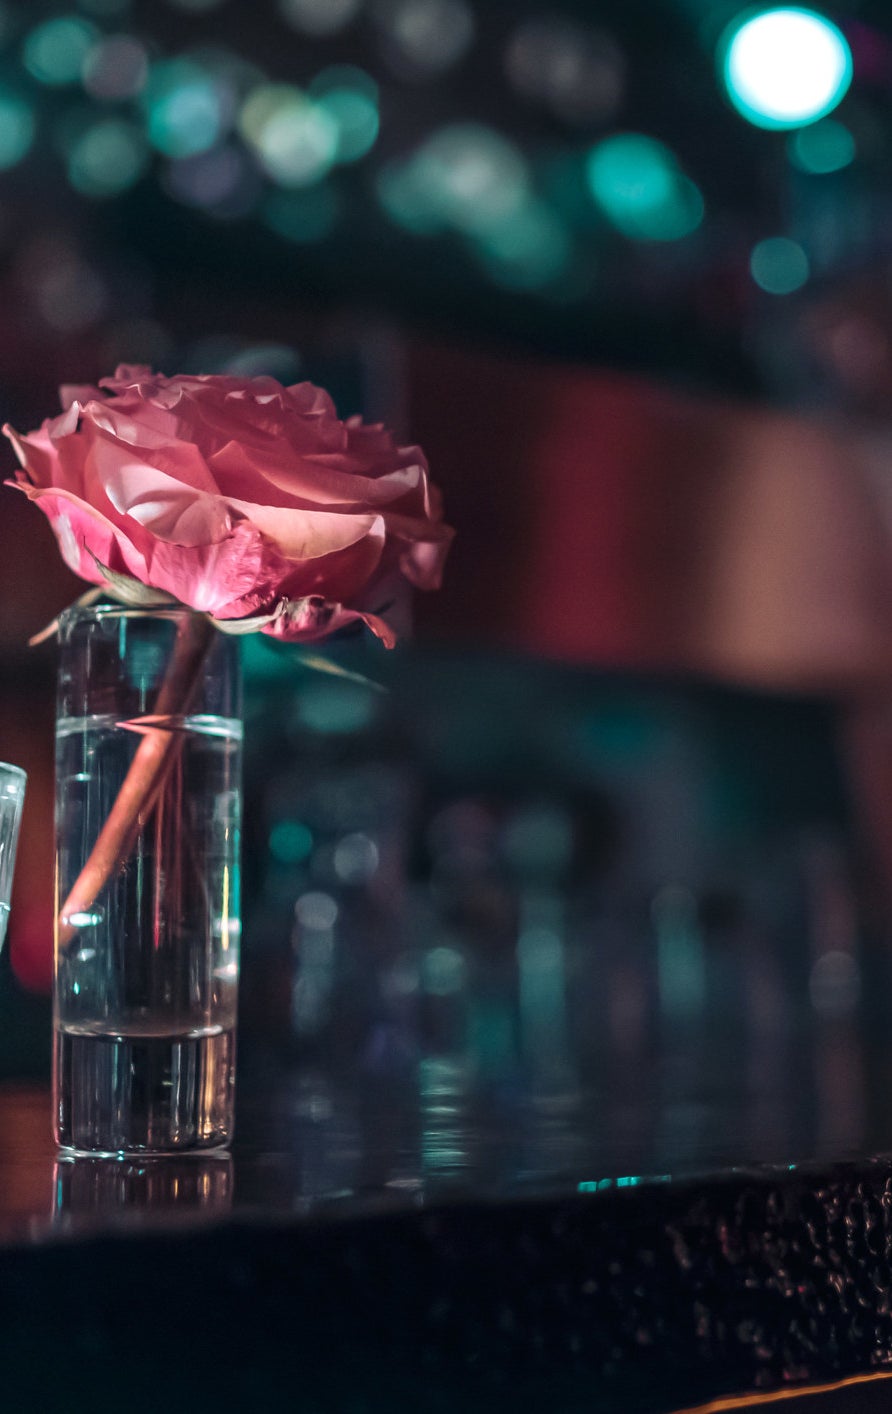 rose and glass at bar